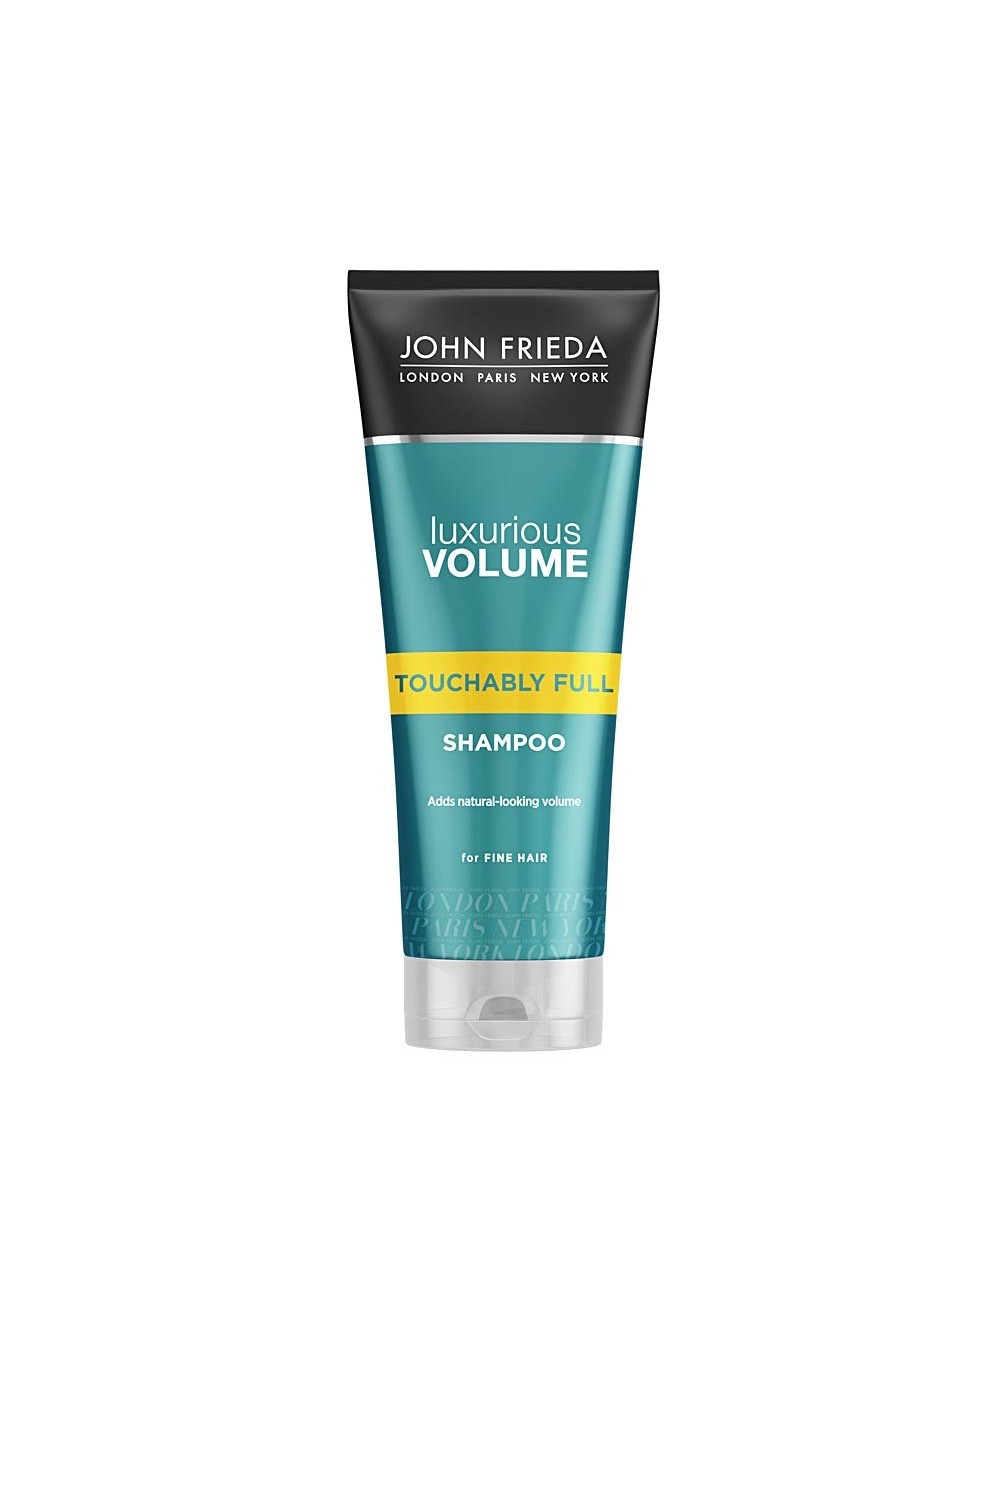 John Frieda Luxurious Volume 7 Days Volume Shampoo 250ml